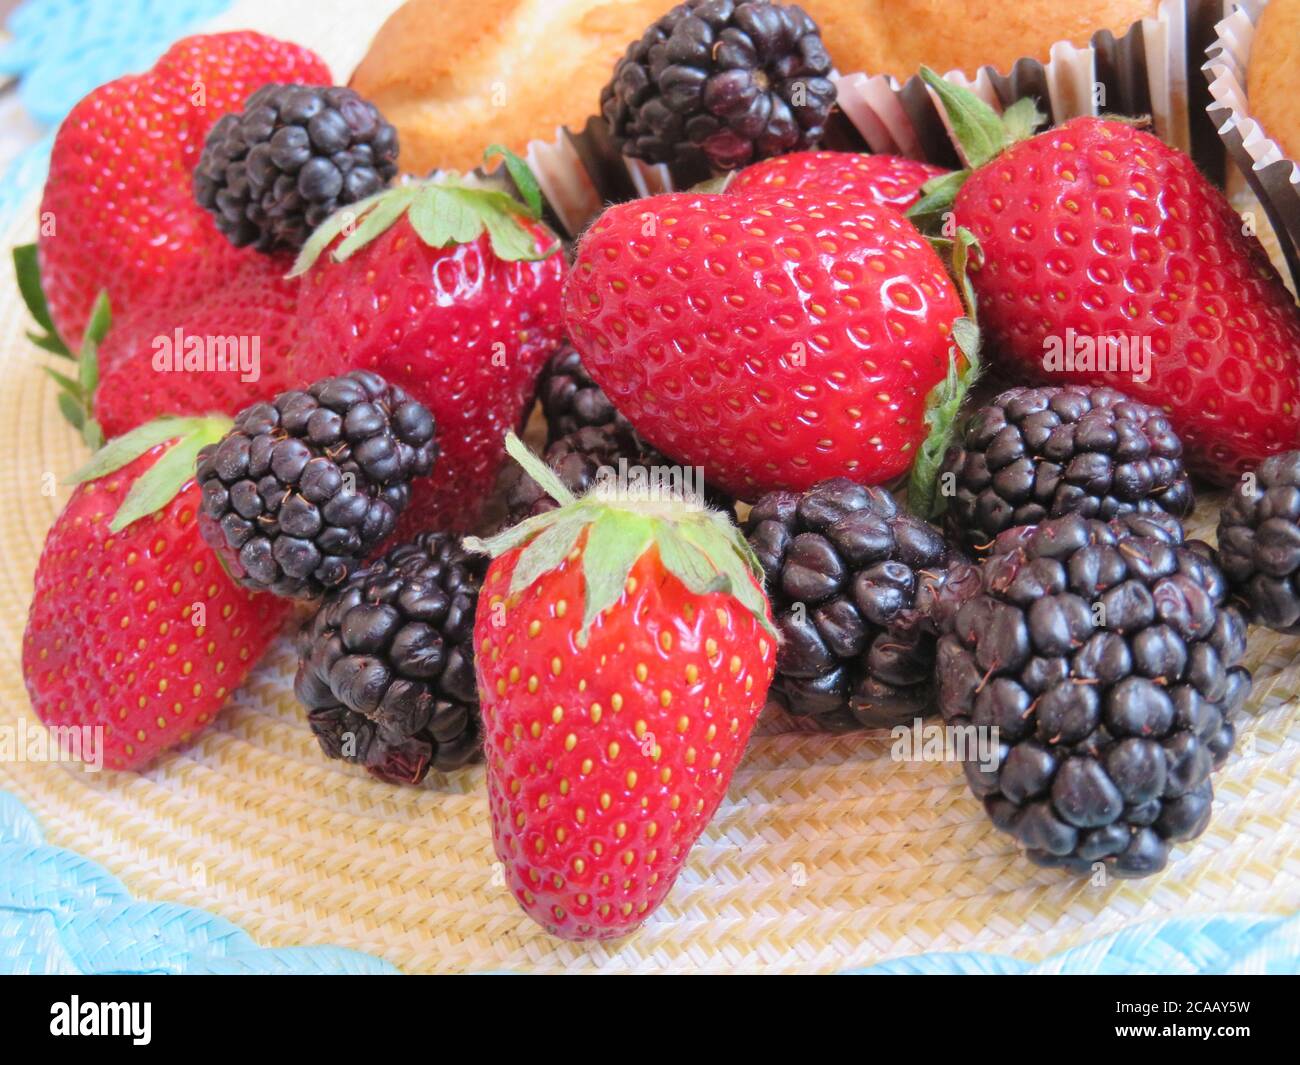 An assortment of berries; fresh, ripe strawberries and blackberries Stock Photo